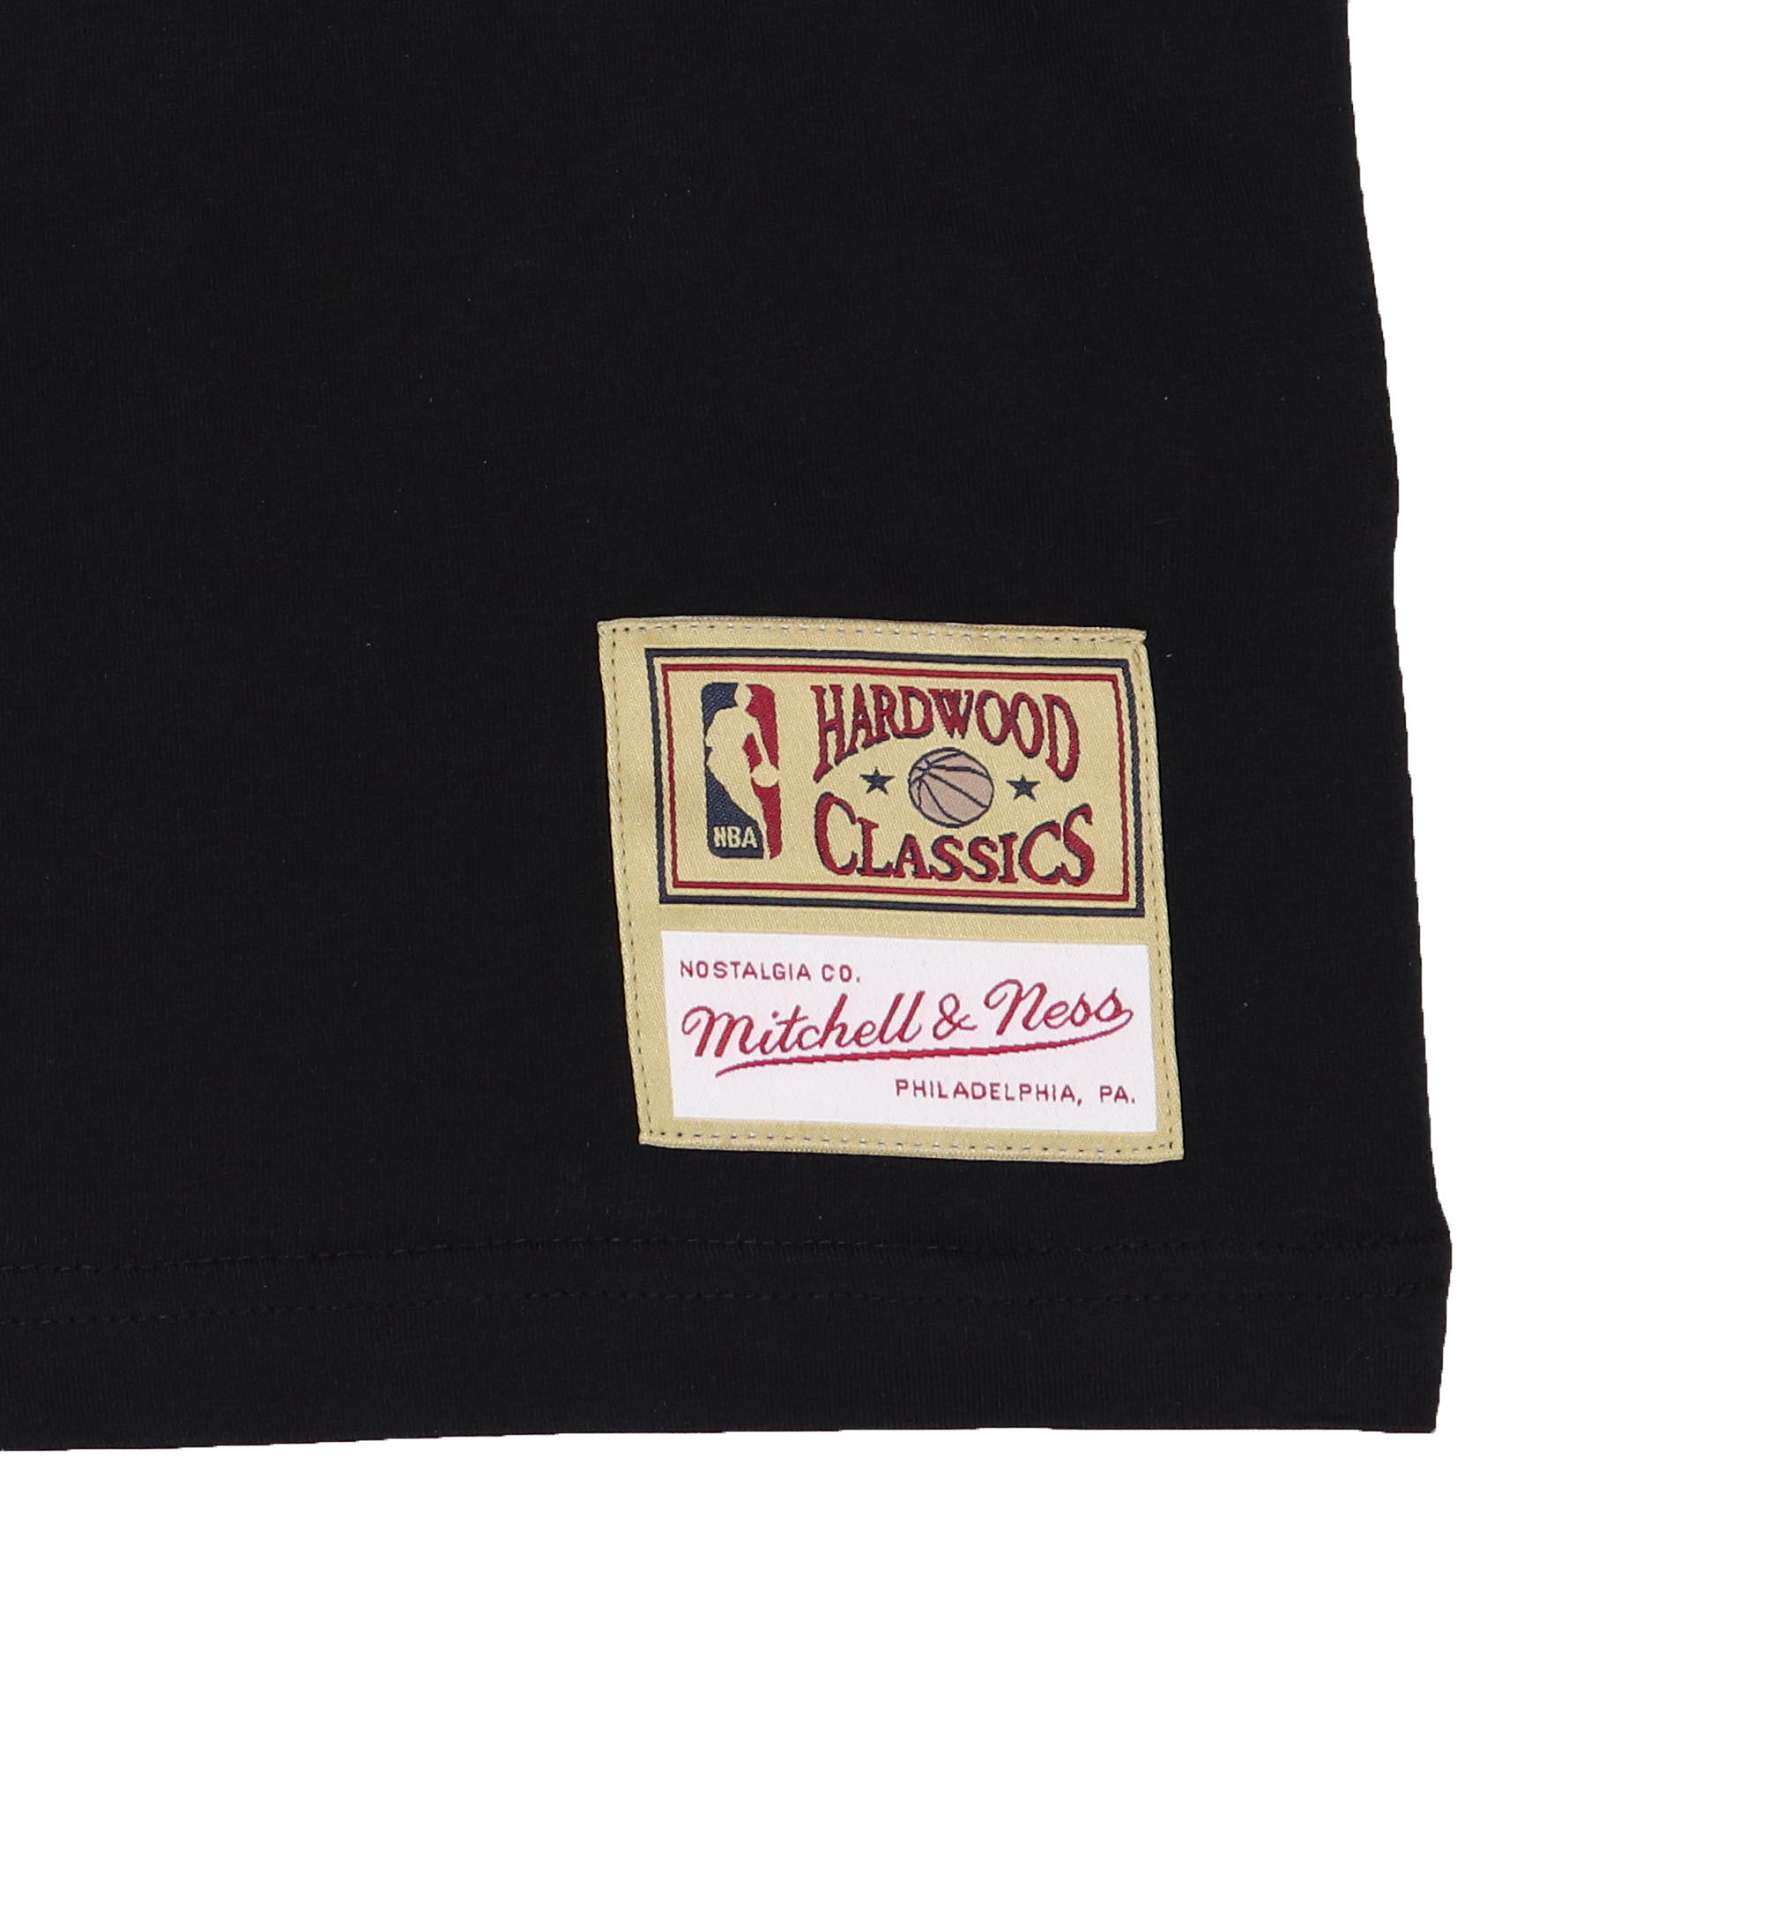 Scottie Pippen #33 Chicago Bulls NBA Name & Number Tee Black T-Shirt Mitchell & Ness